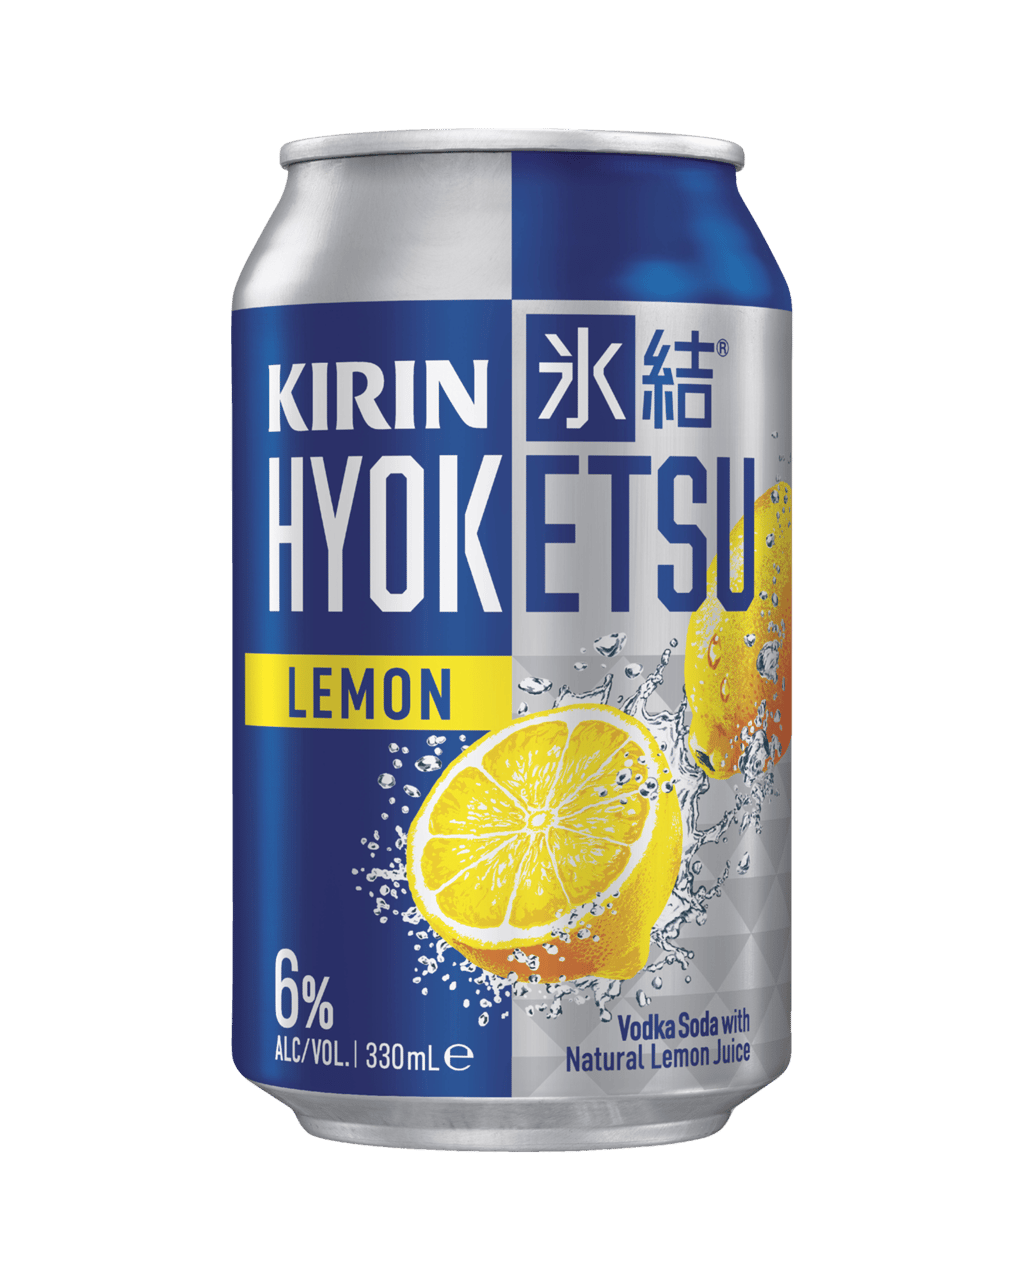 Image - Hyoketsu Lemon by Kirin